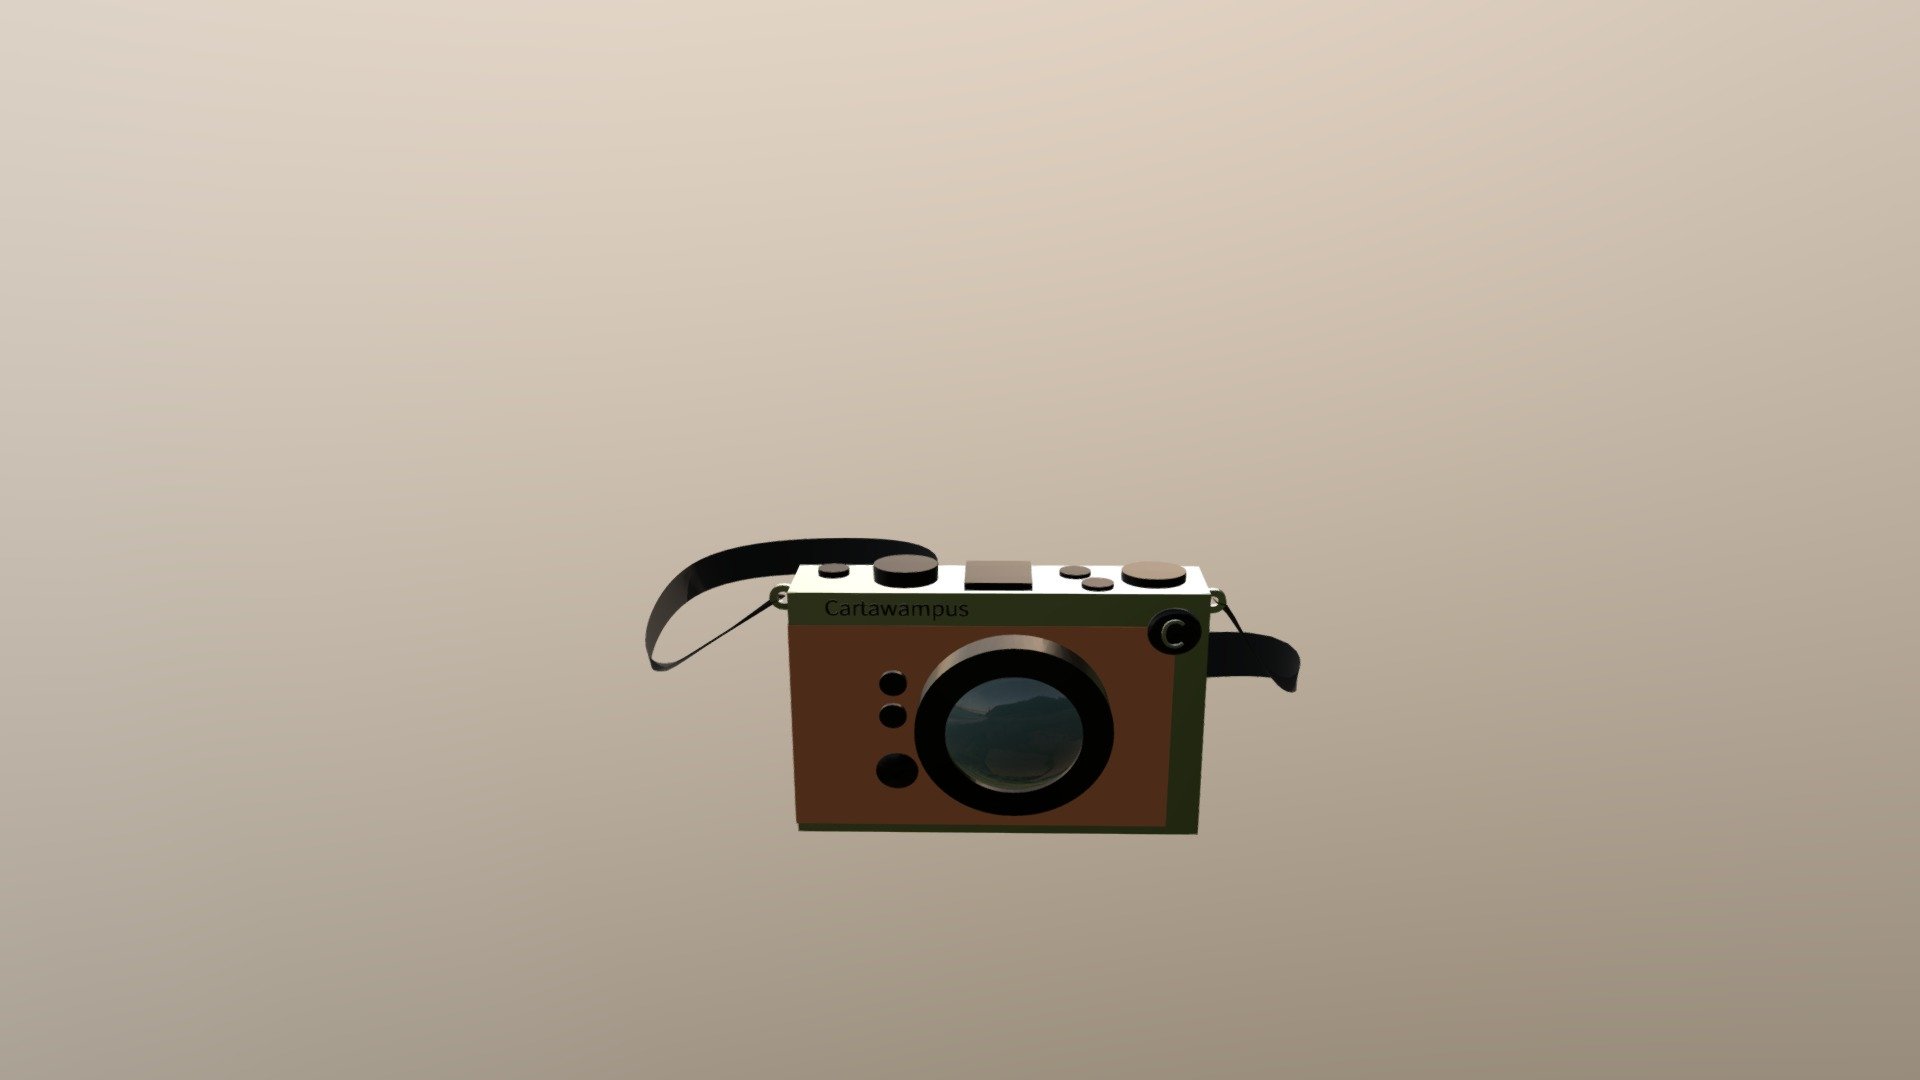 A Simple Camera